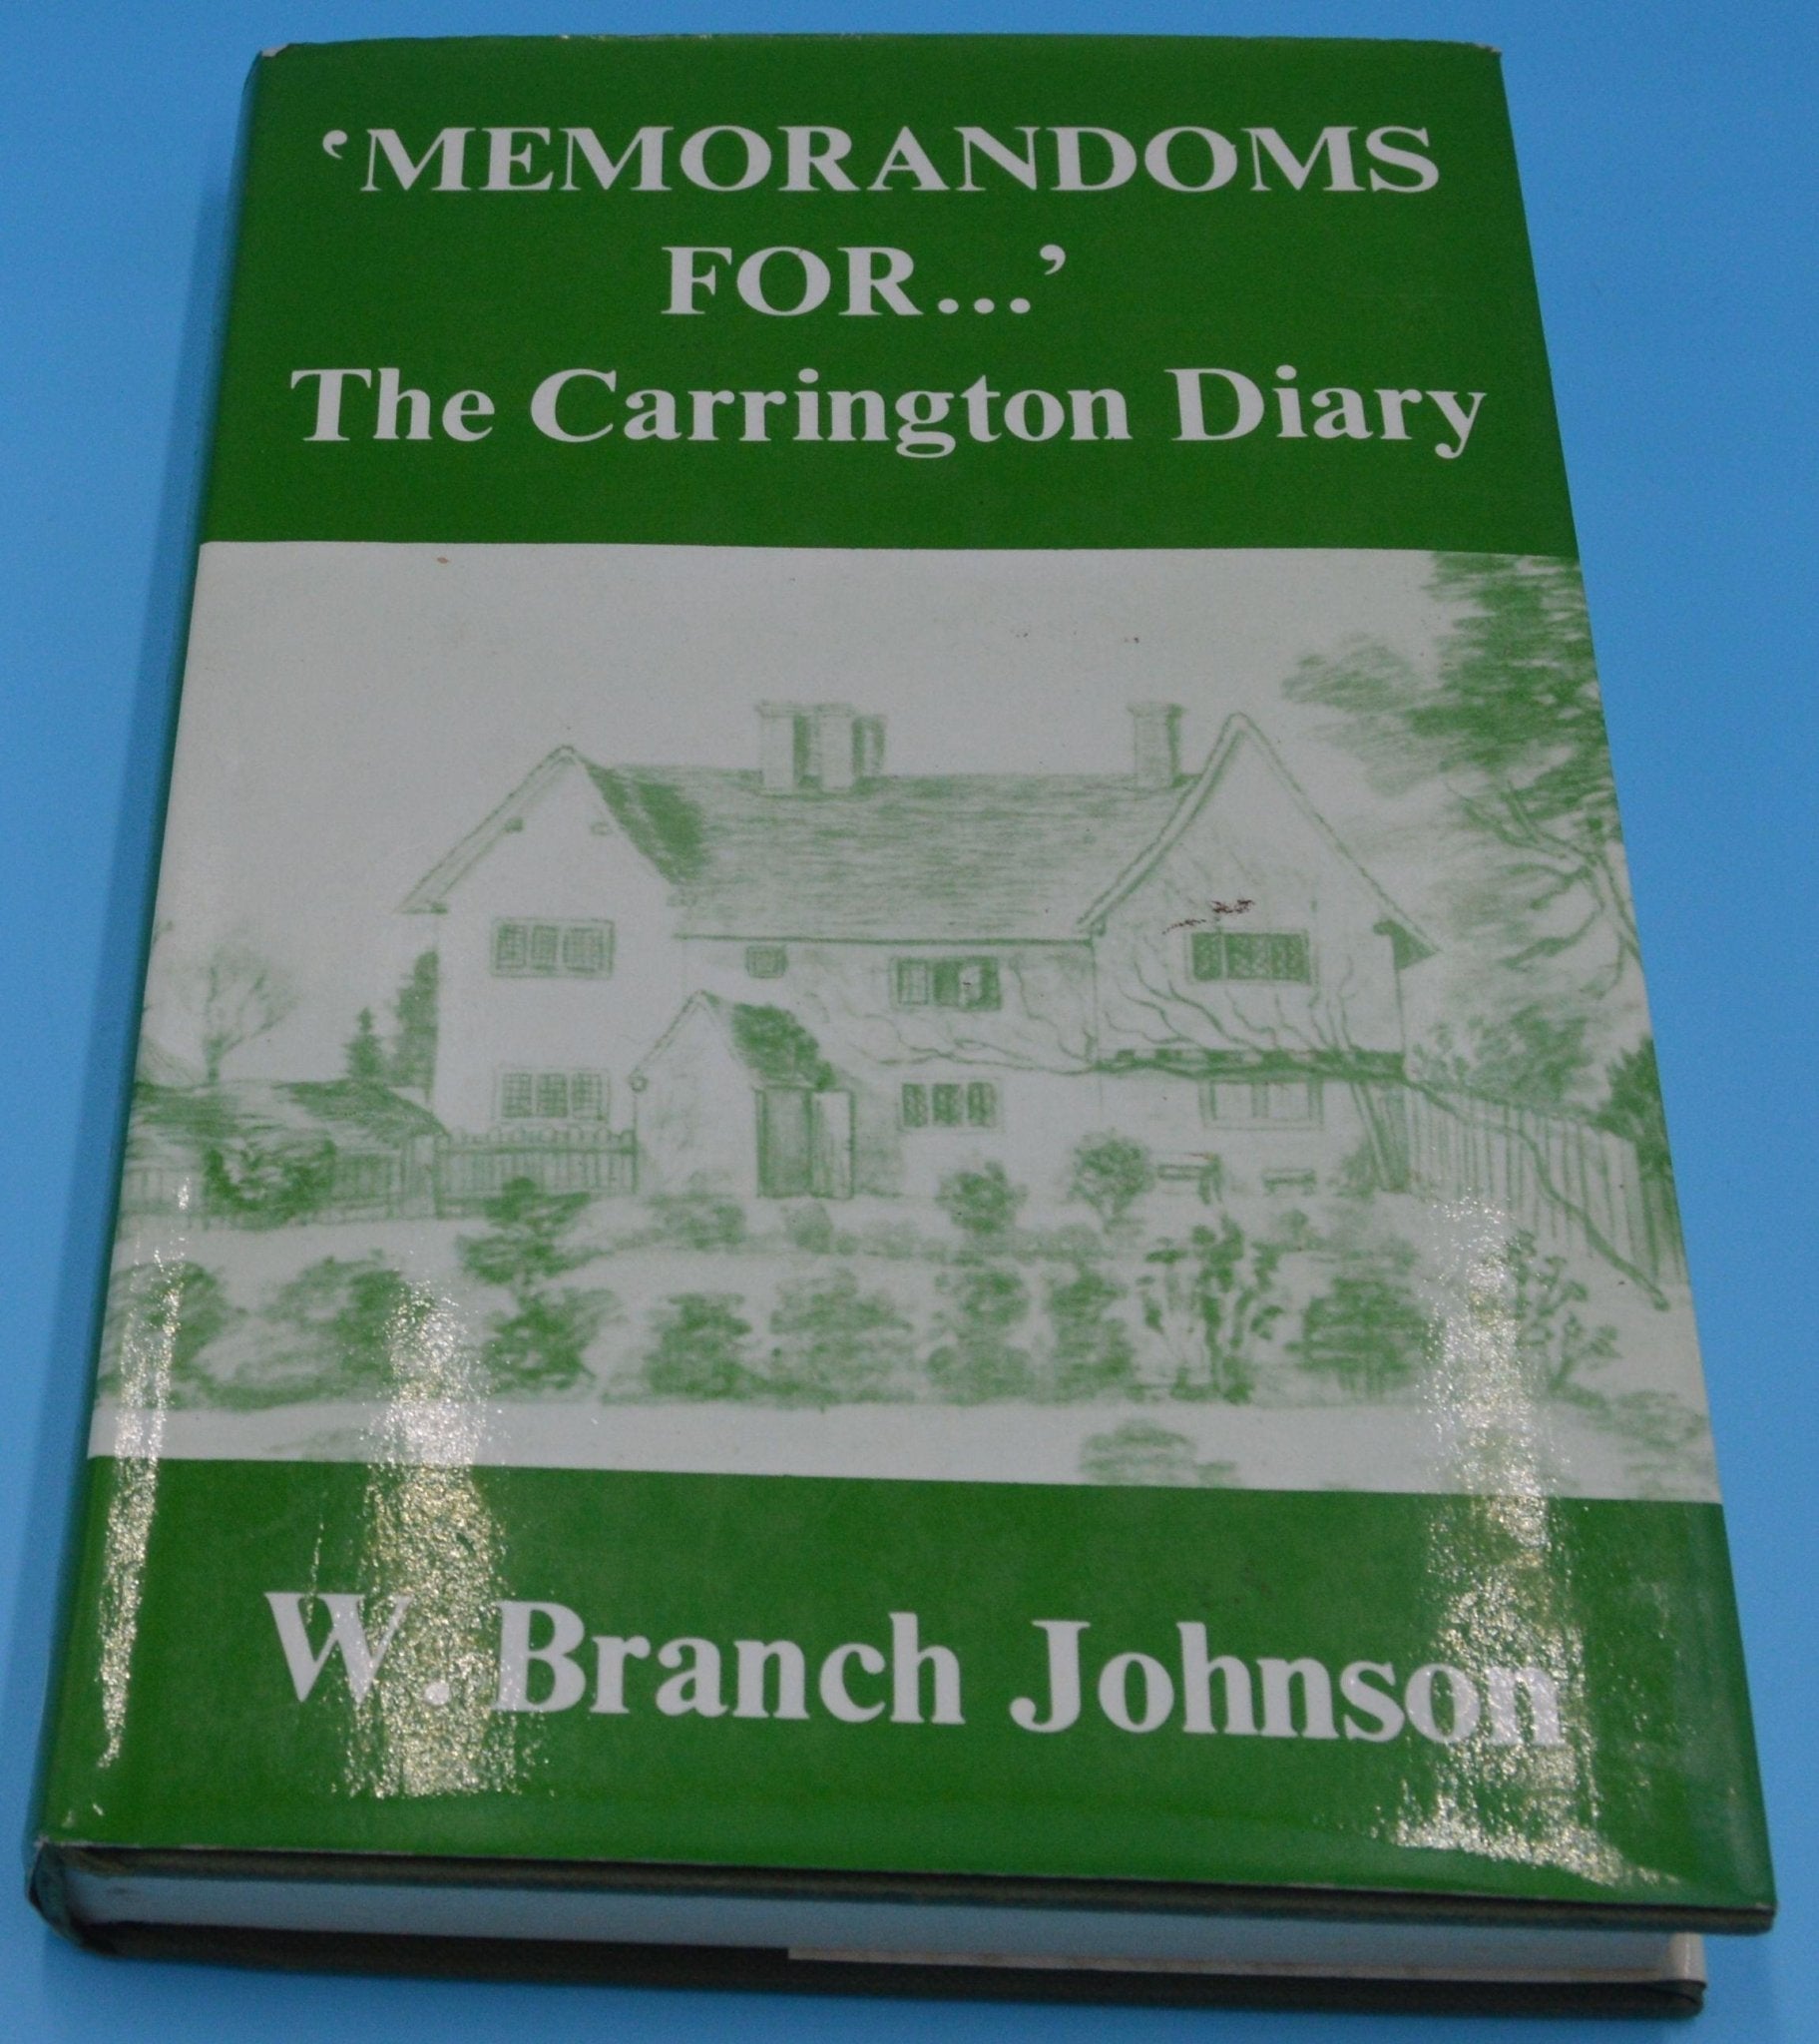 SECONDHAND BOOK MEMORANDUM FOR CARRINGTON DIARY EDITED by WILLIAM B JOHNSON - TMD167207